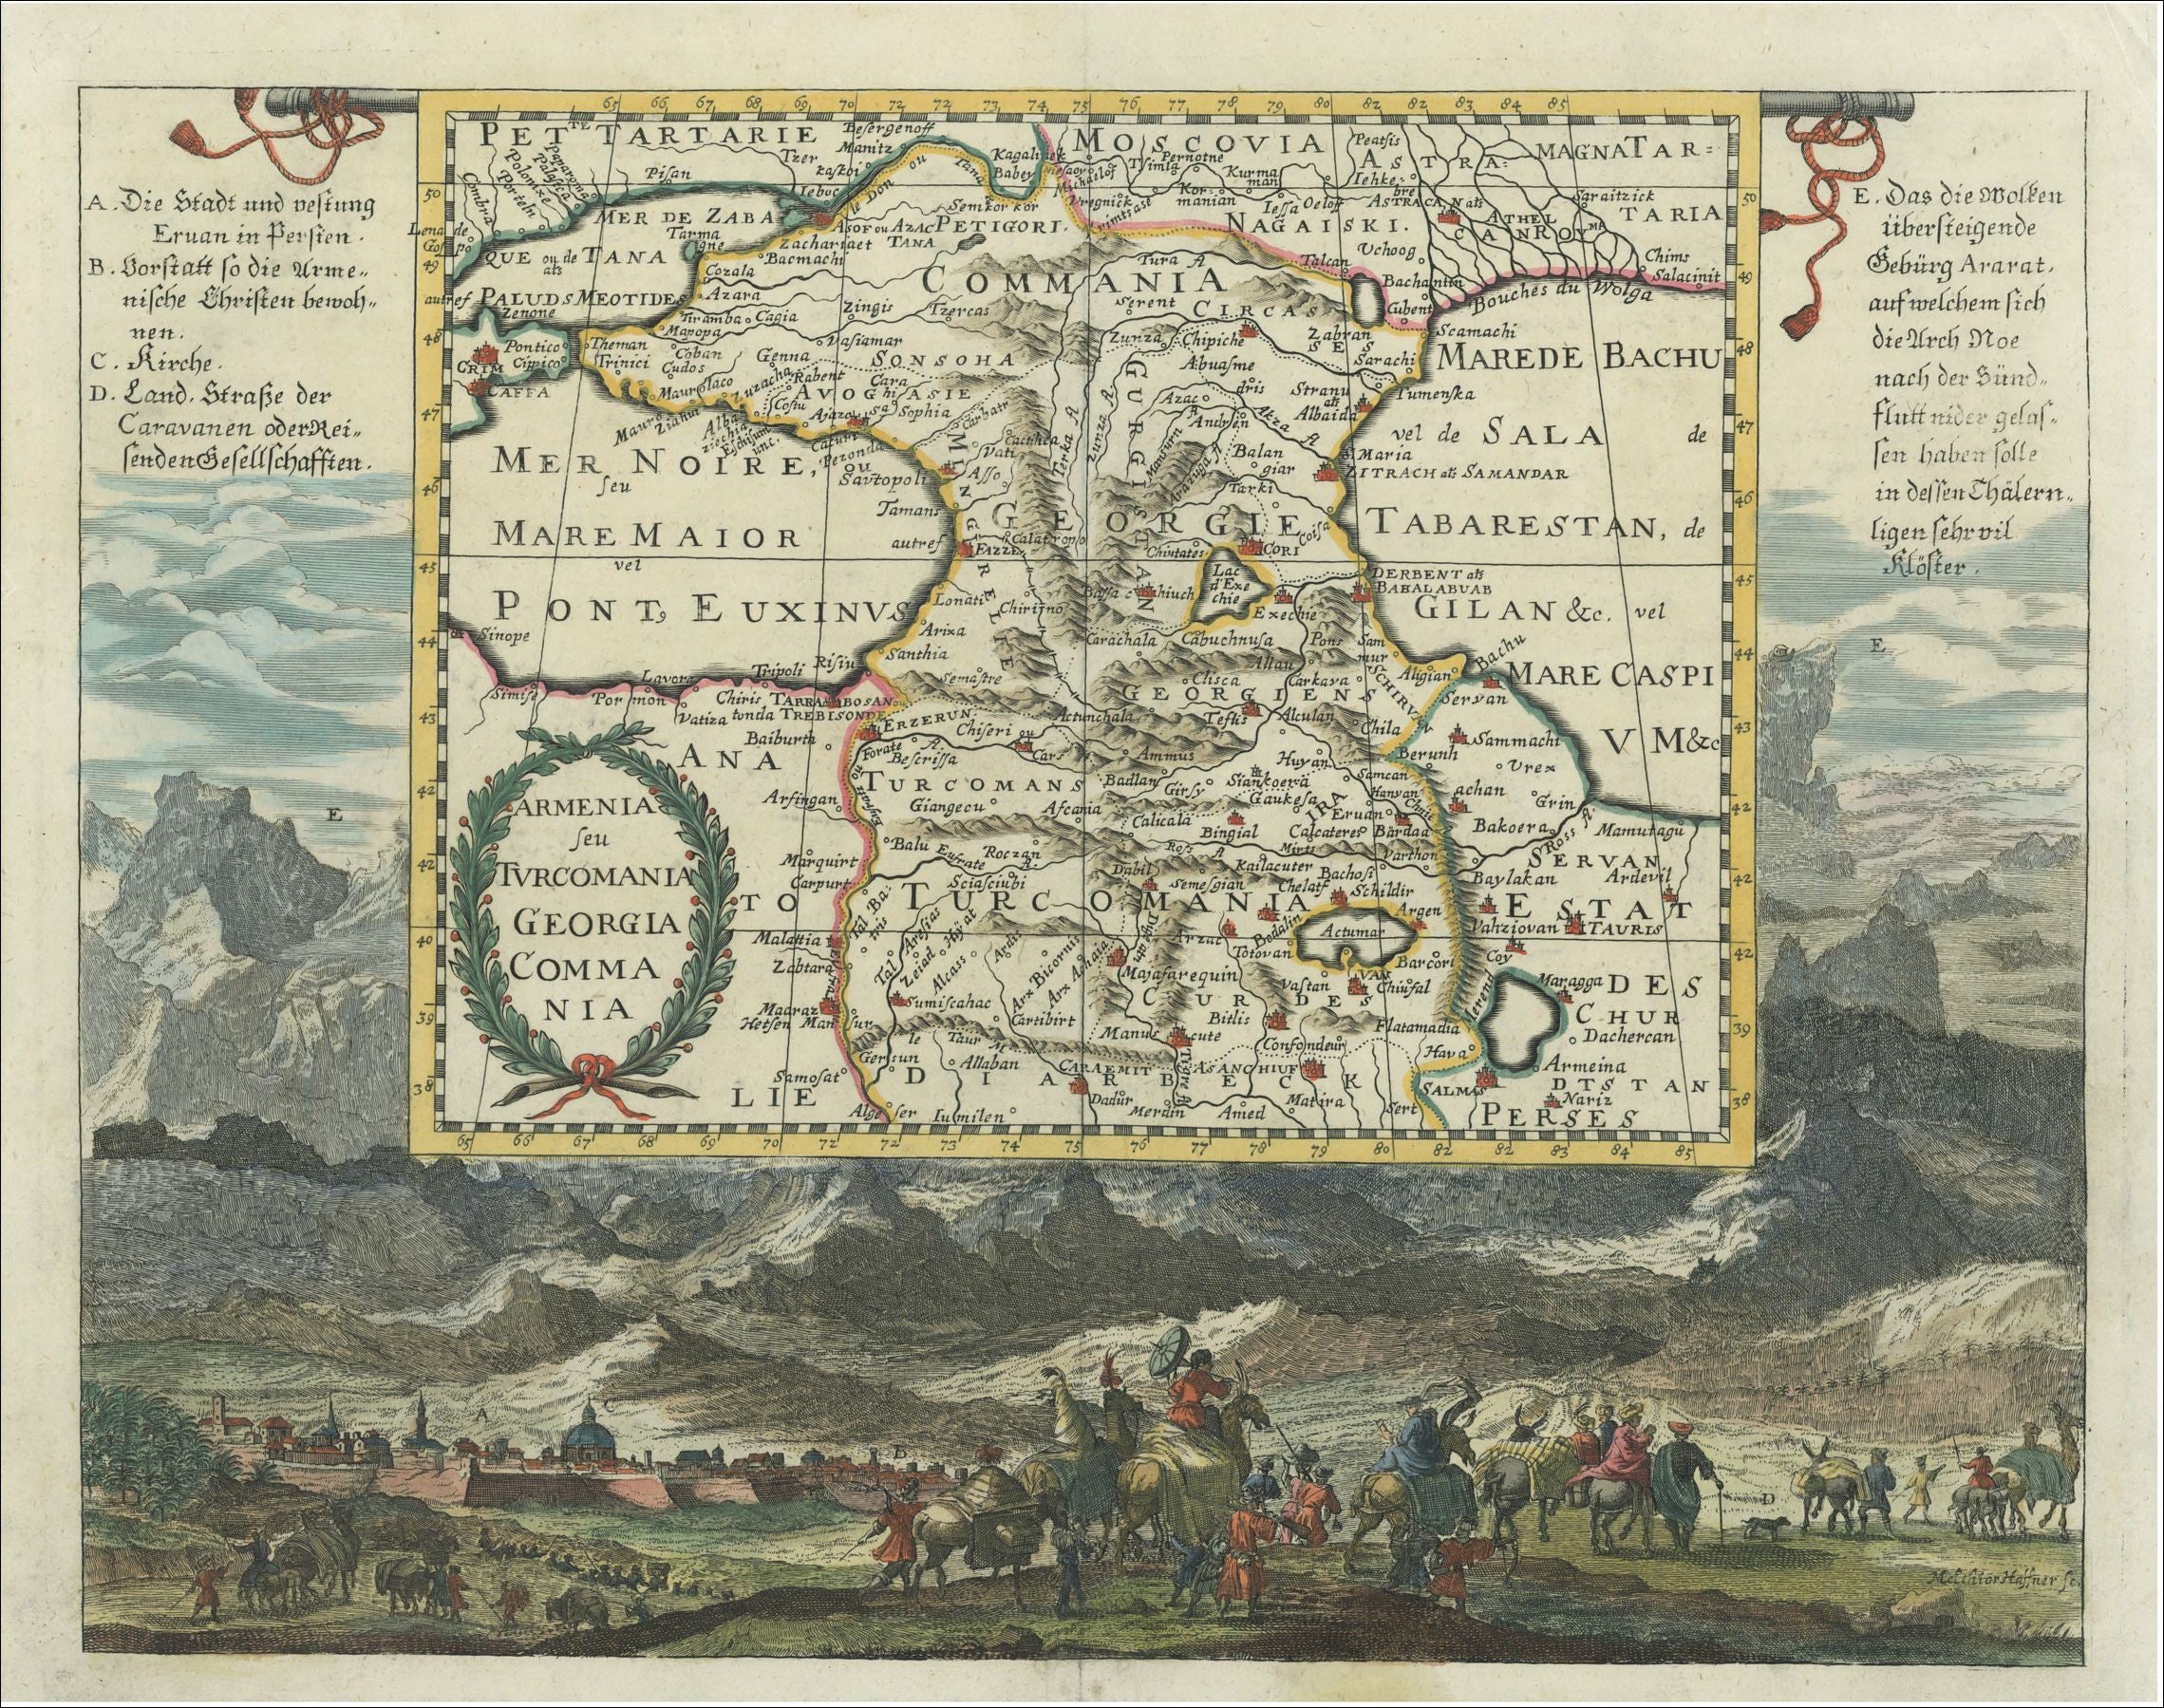 R3862  Melchior Haffner (aus J. C. Wagner): Armenia, Turcomania, Georgia, Commania 1685